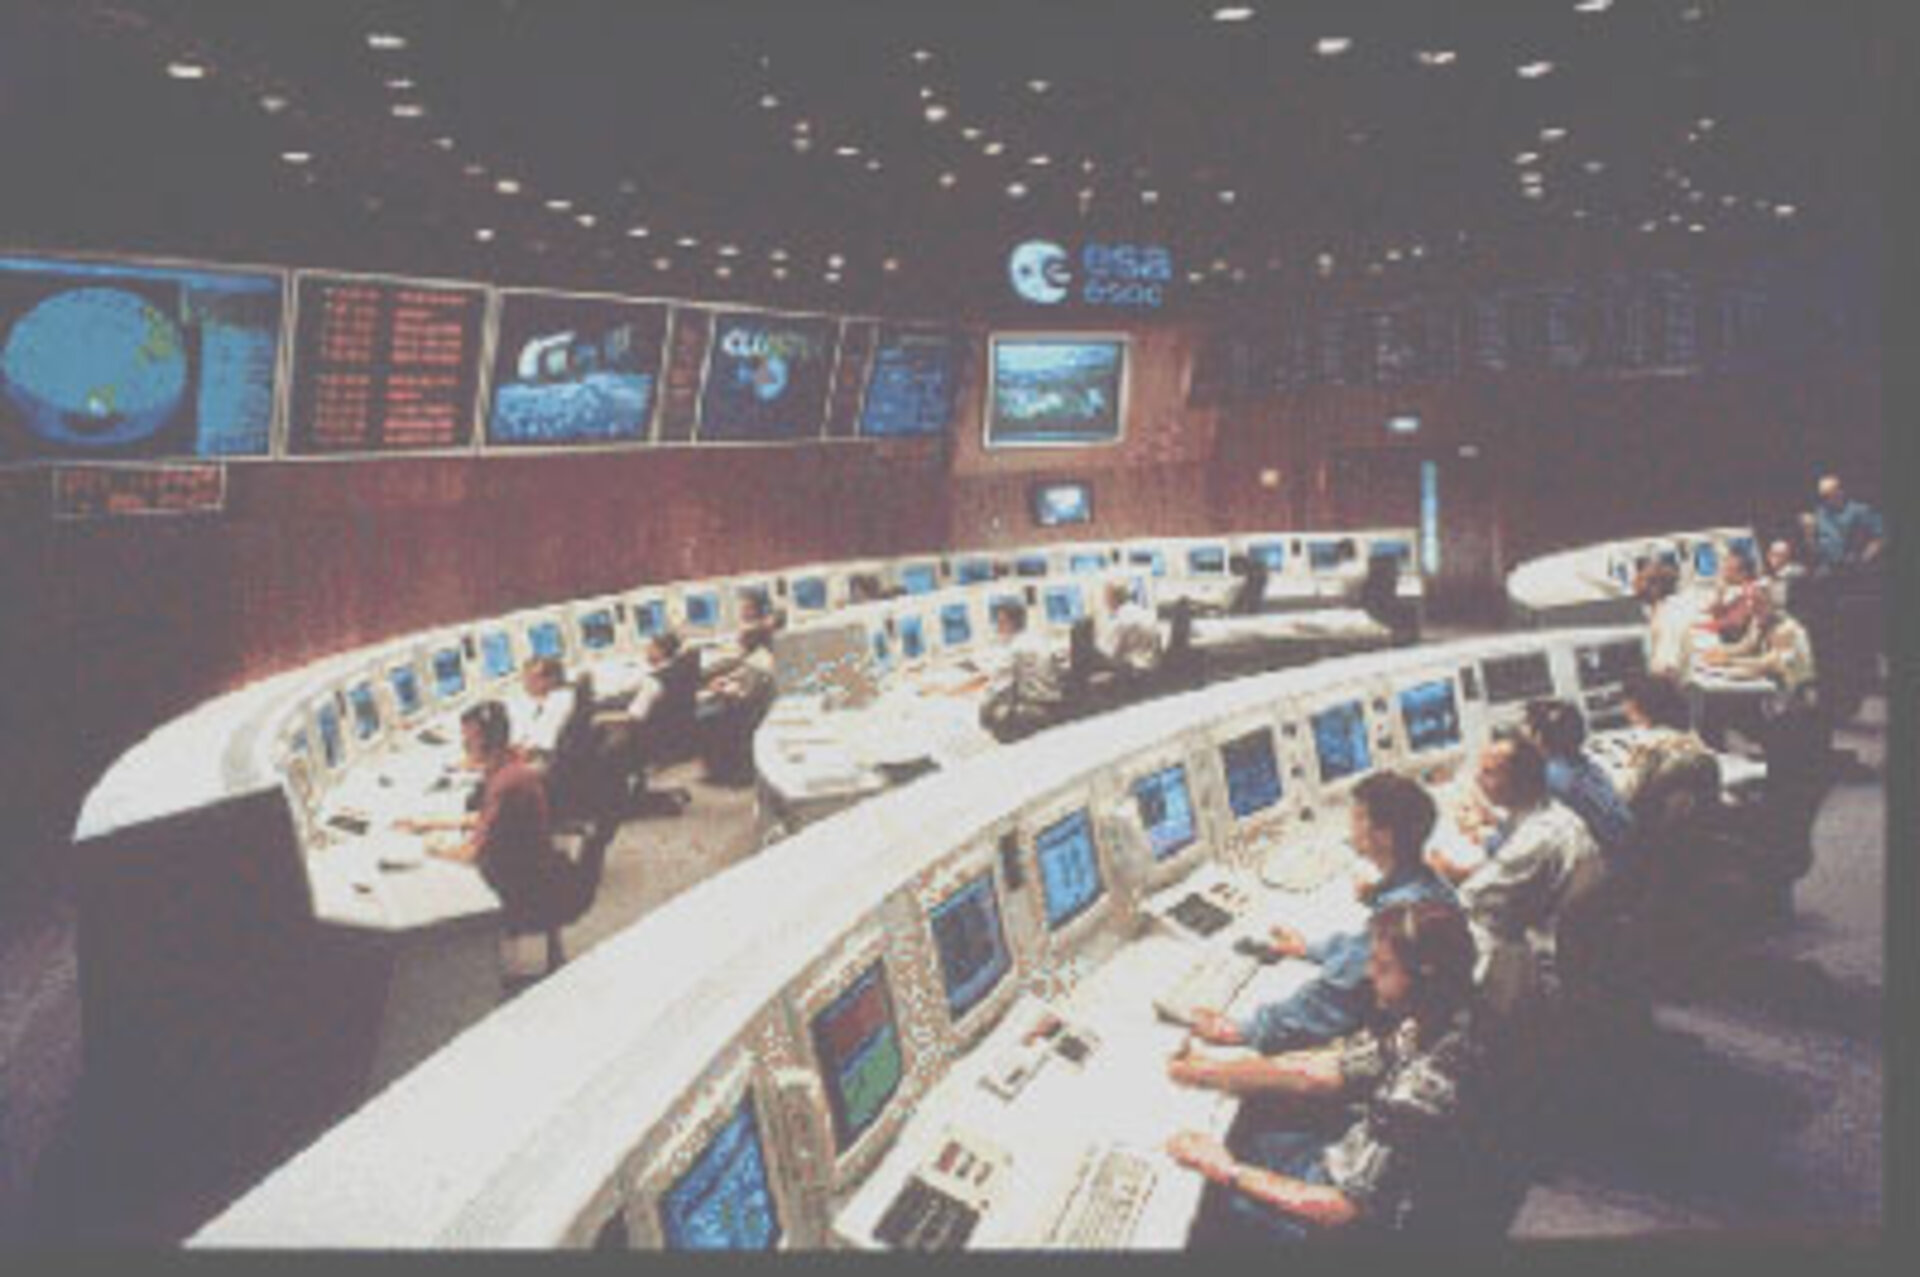 Mission control room, ESOC